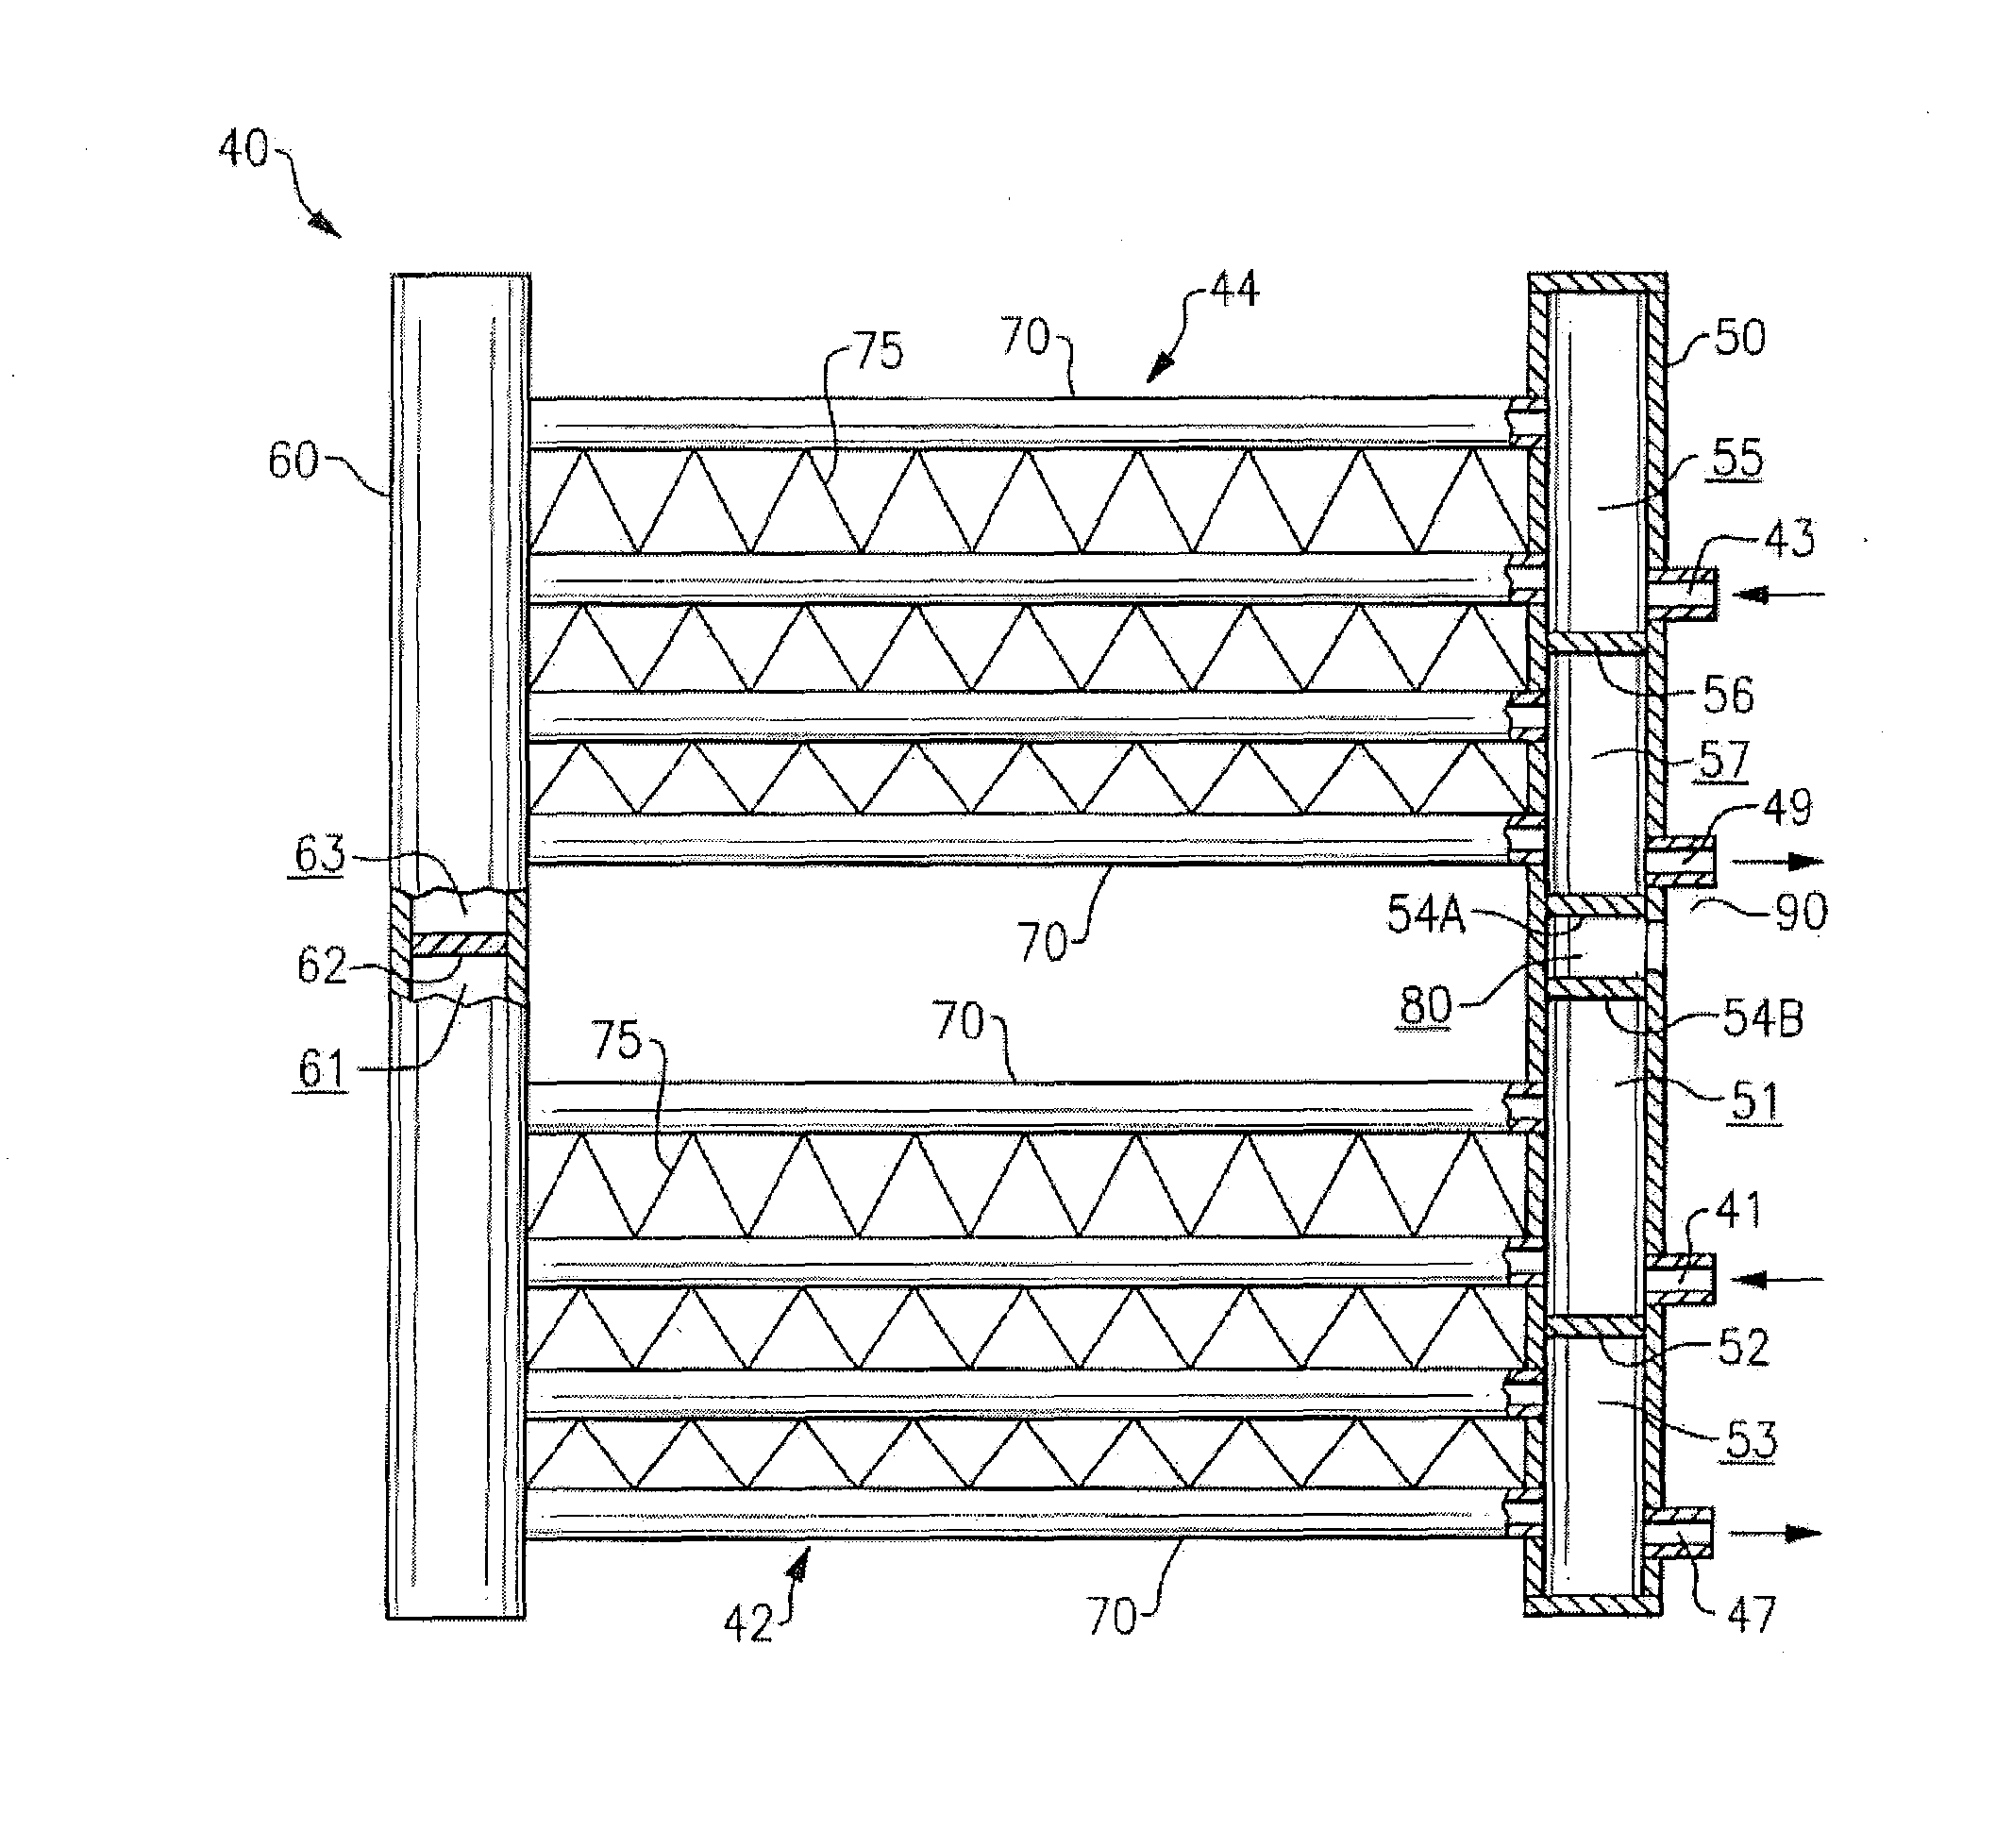 Multi-circuit heat exchanger